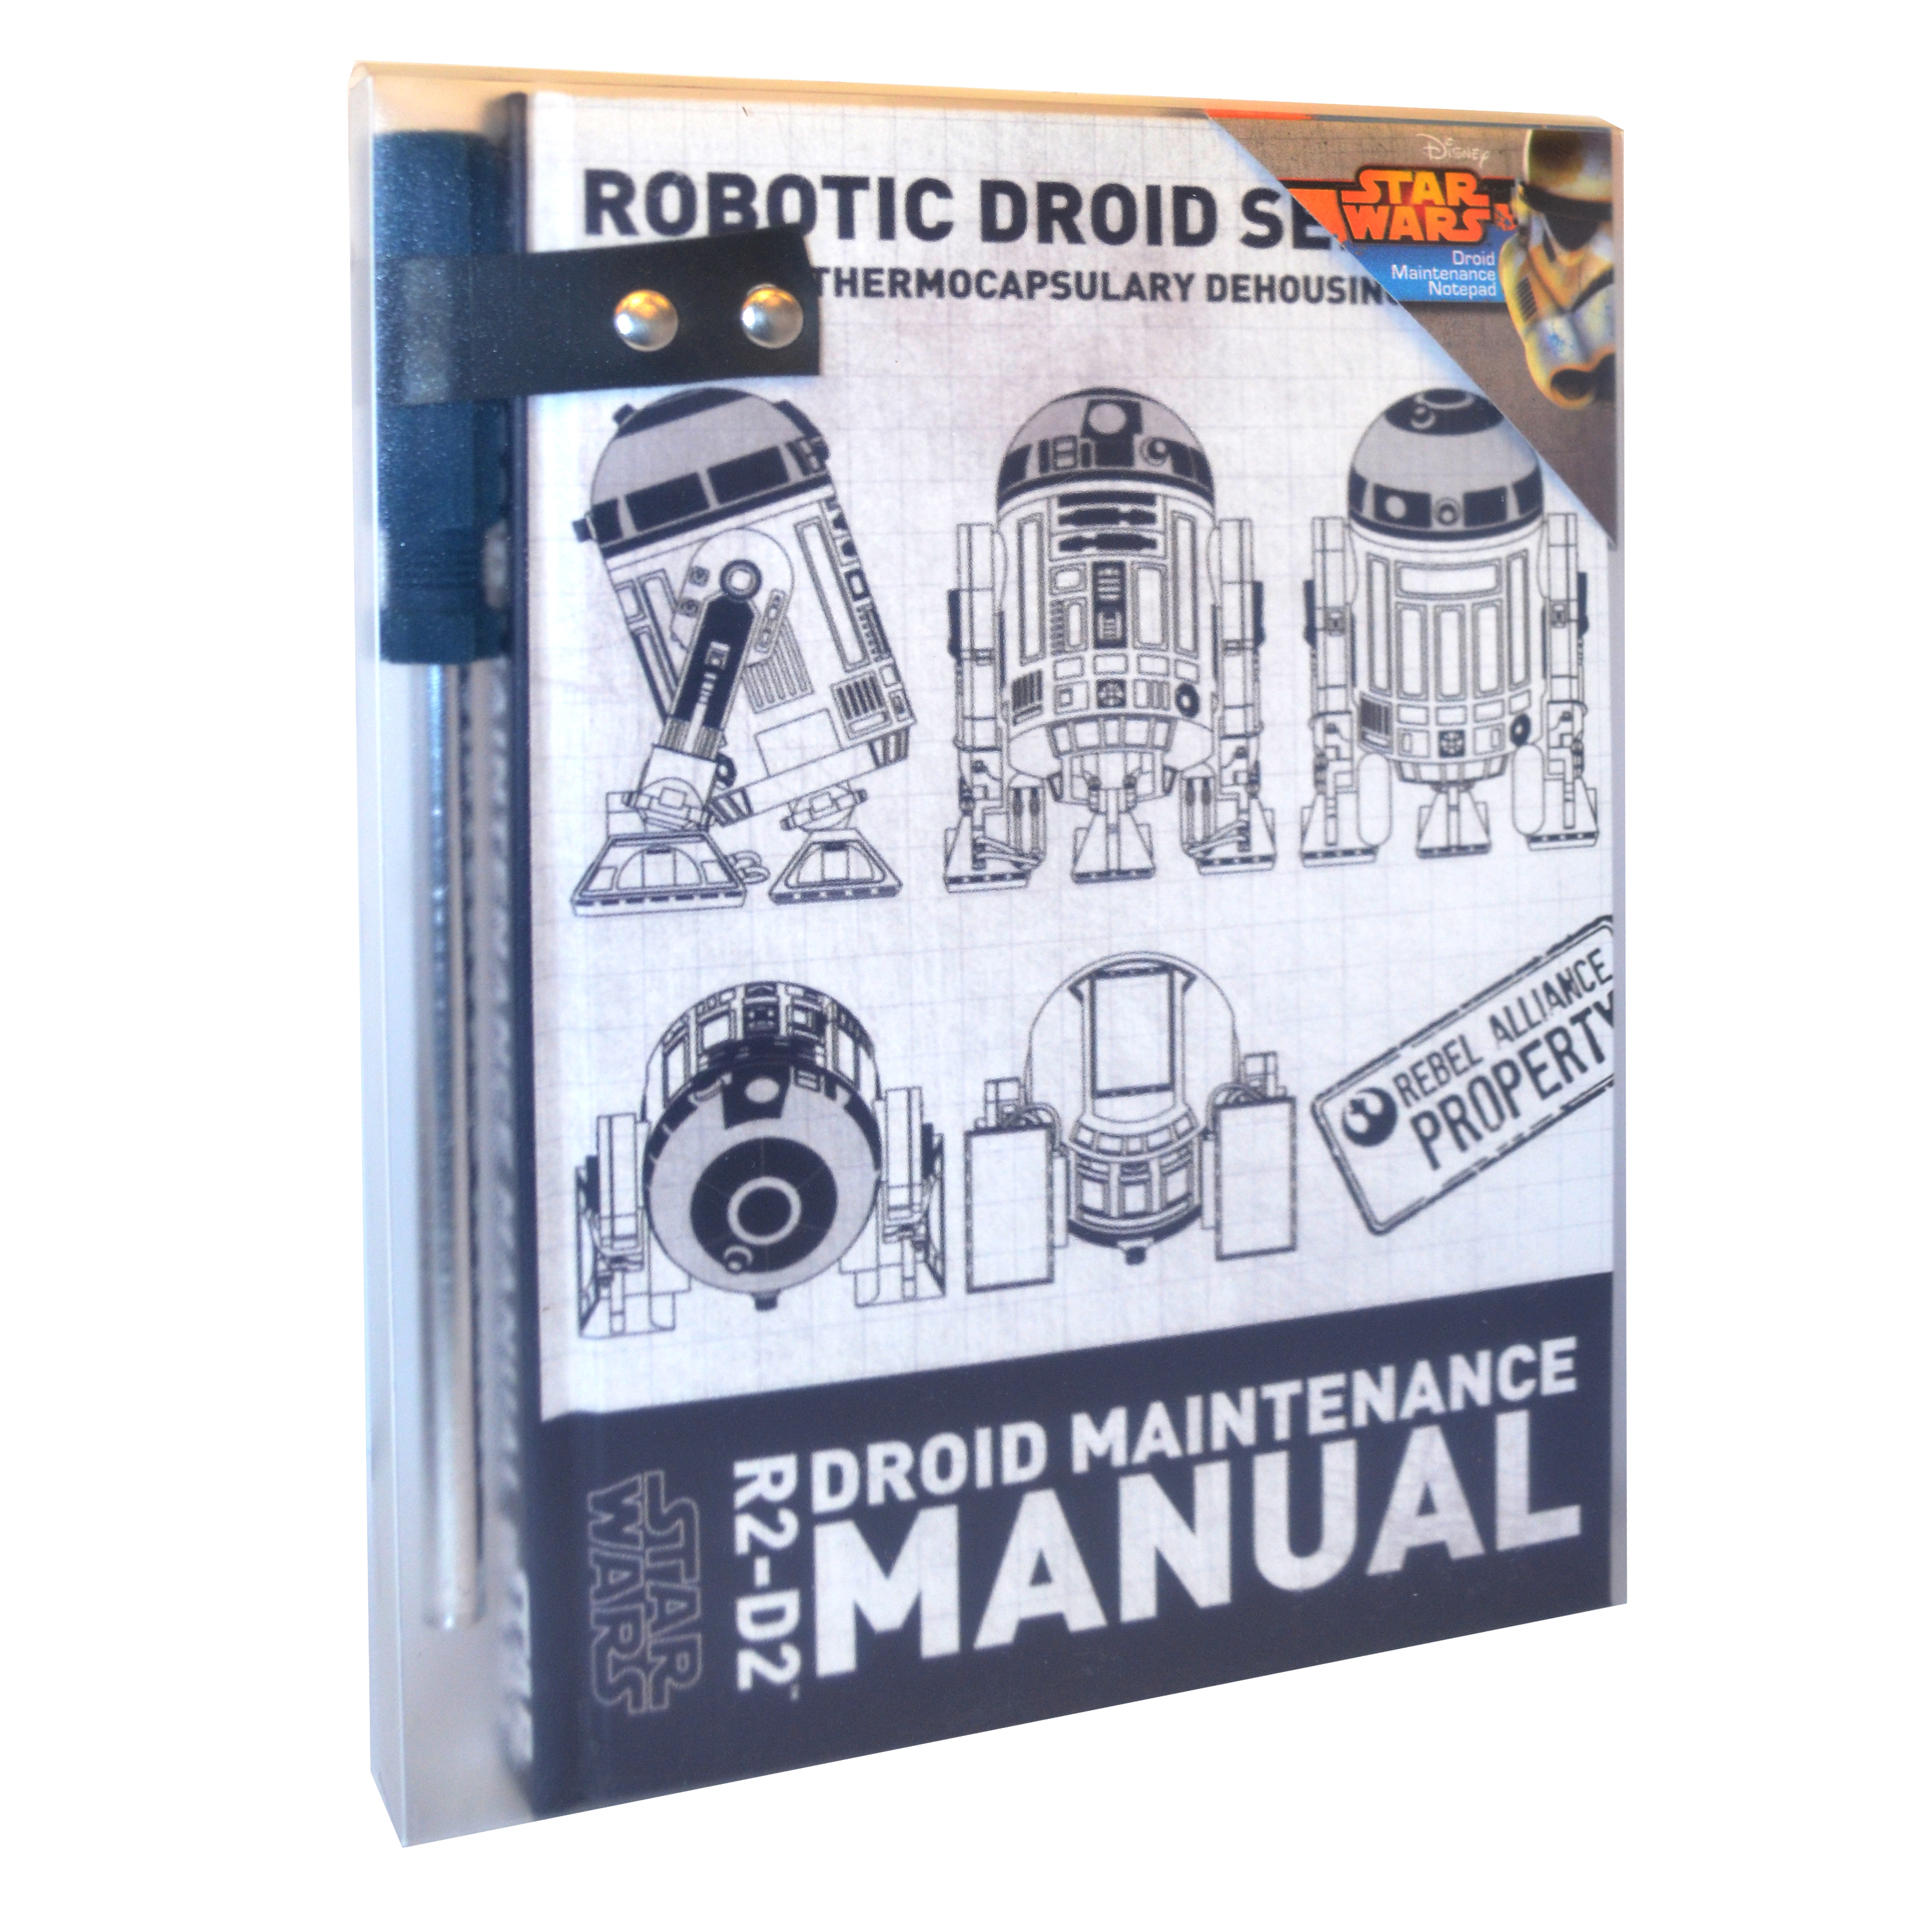 Star Wars Droid Manual Notepad Stationery